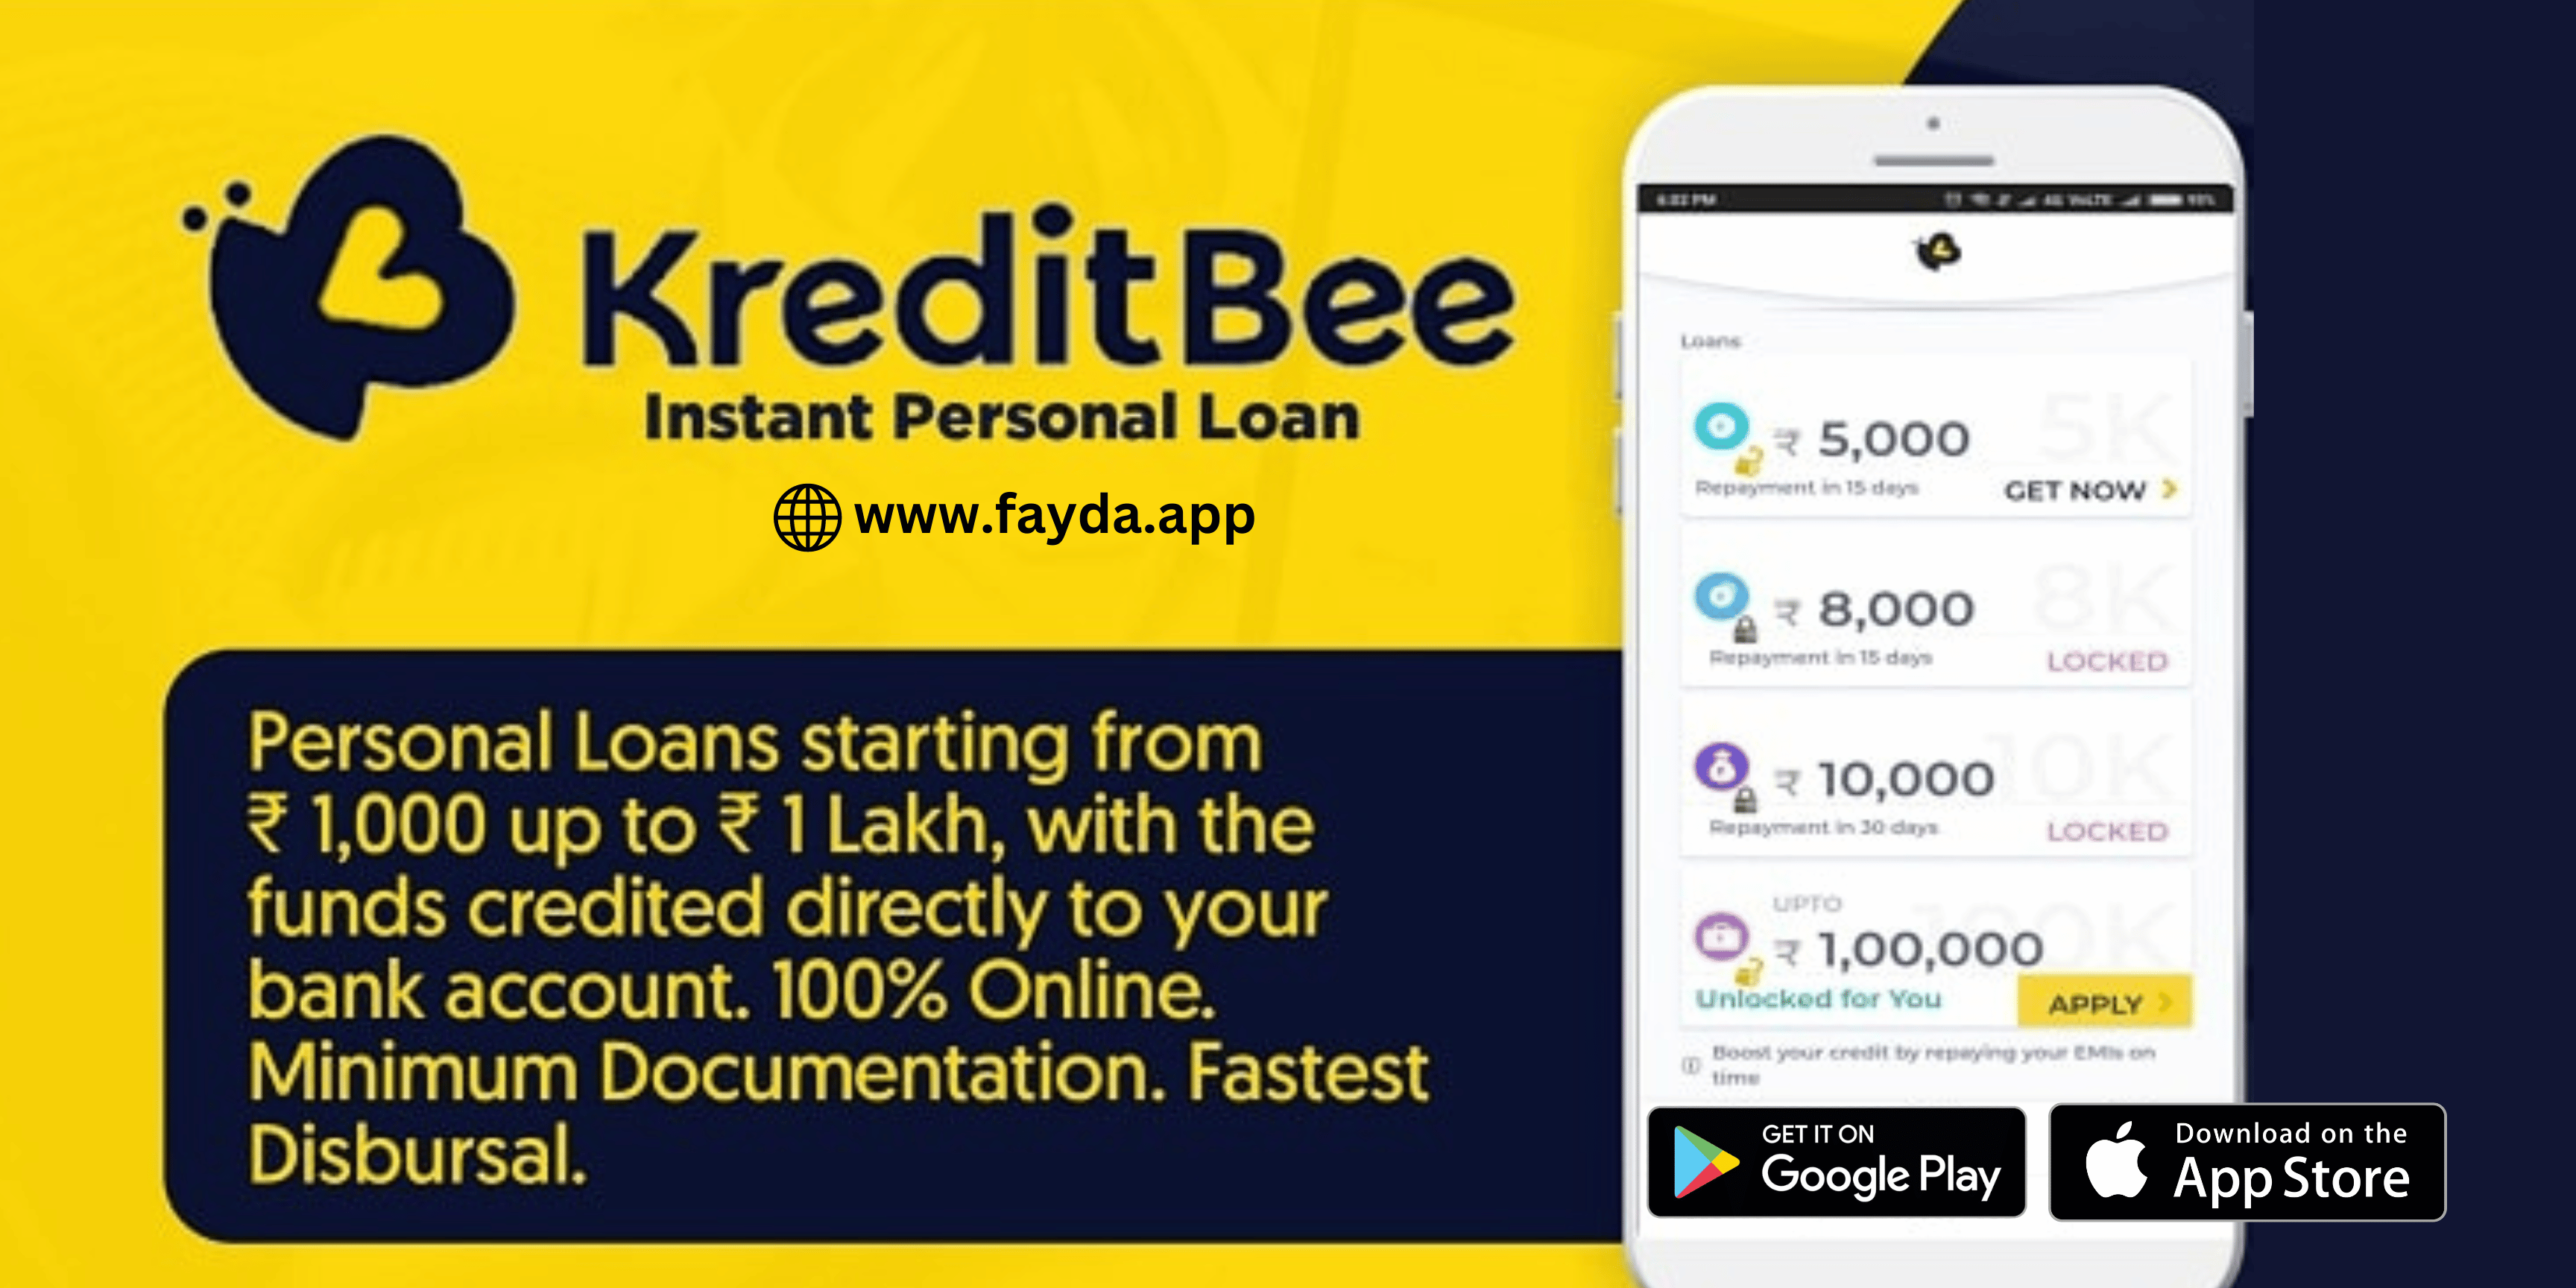 How can I take loan from KreditBee?